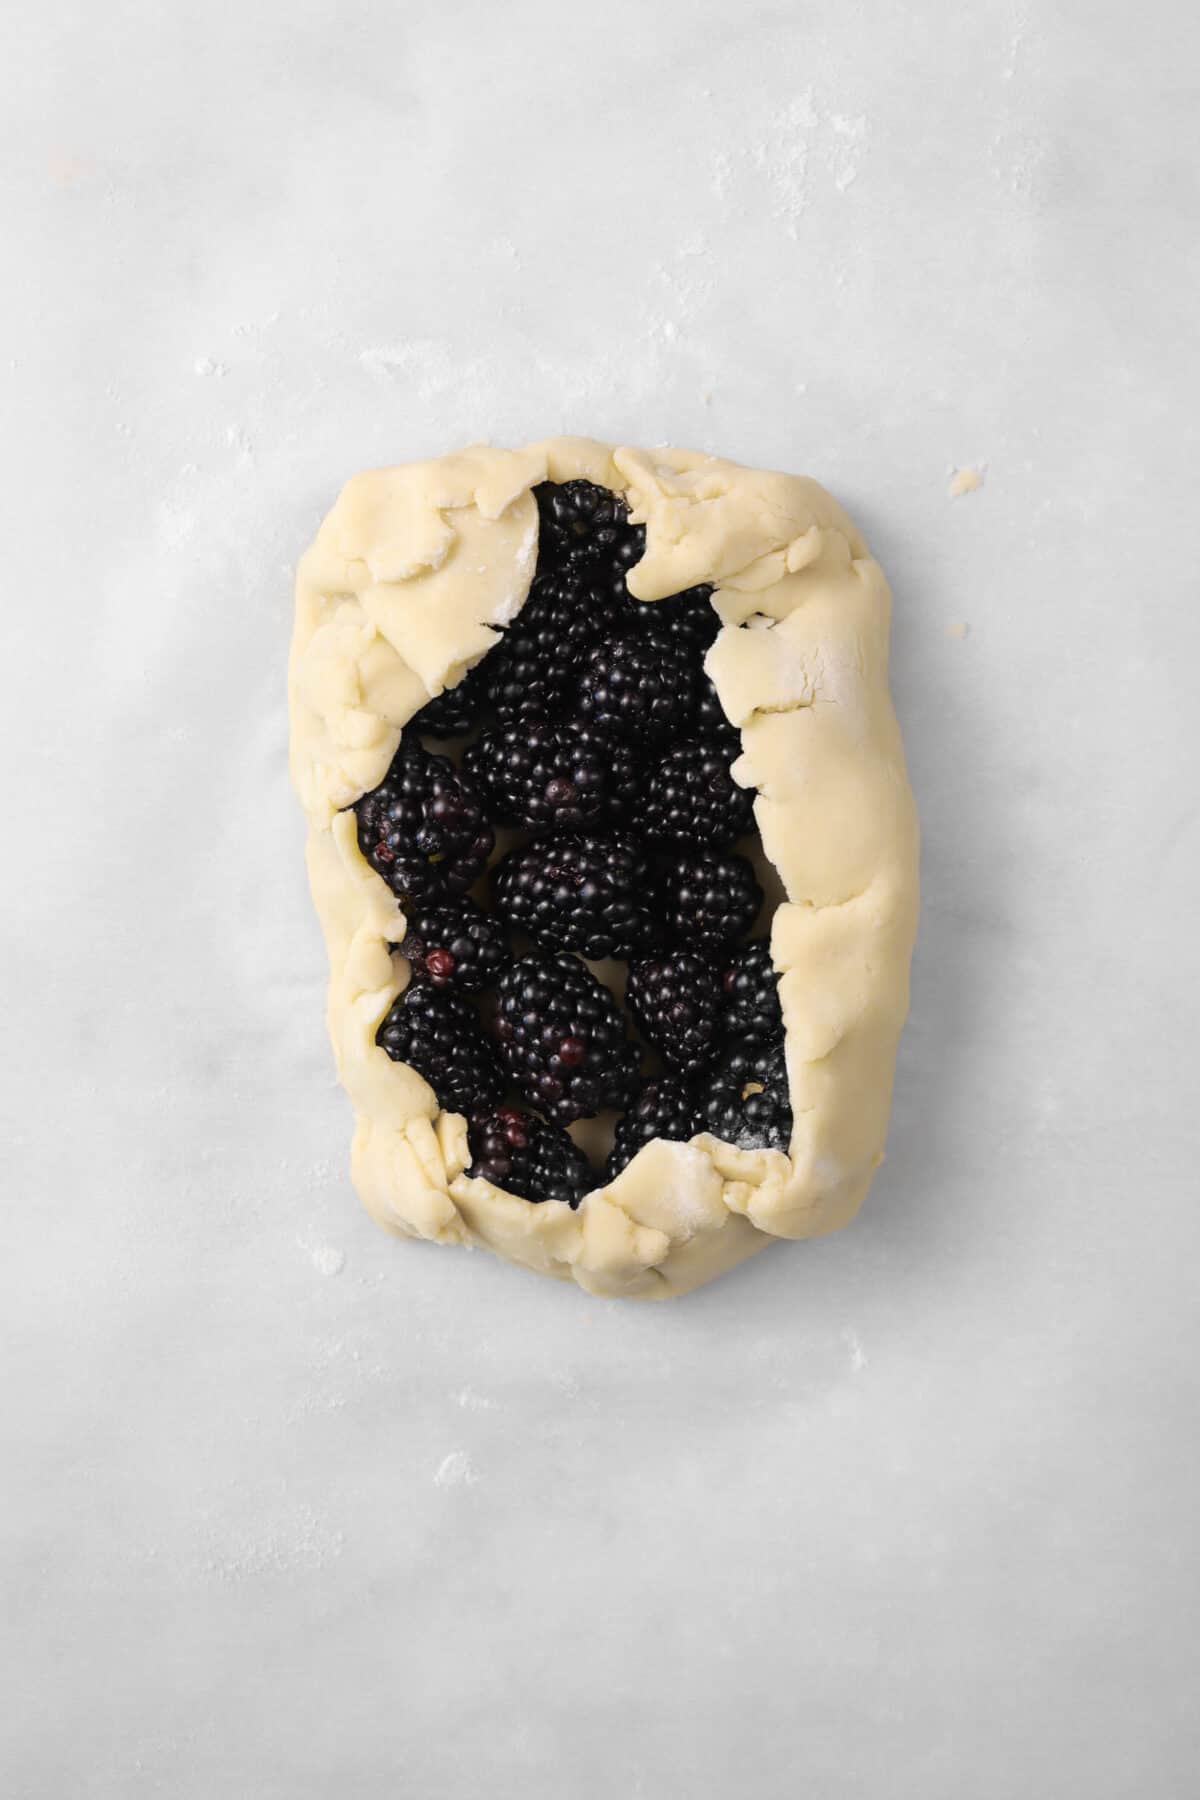 pastry dough folded up over blackberries